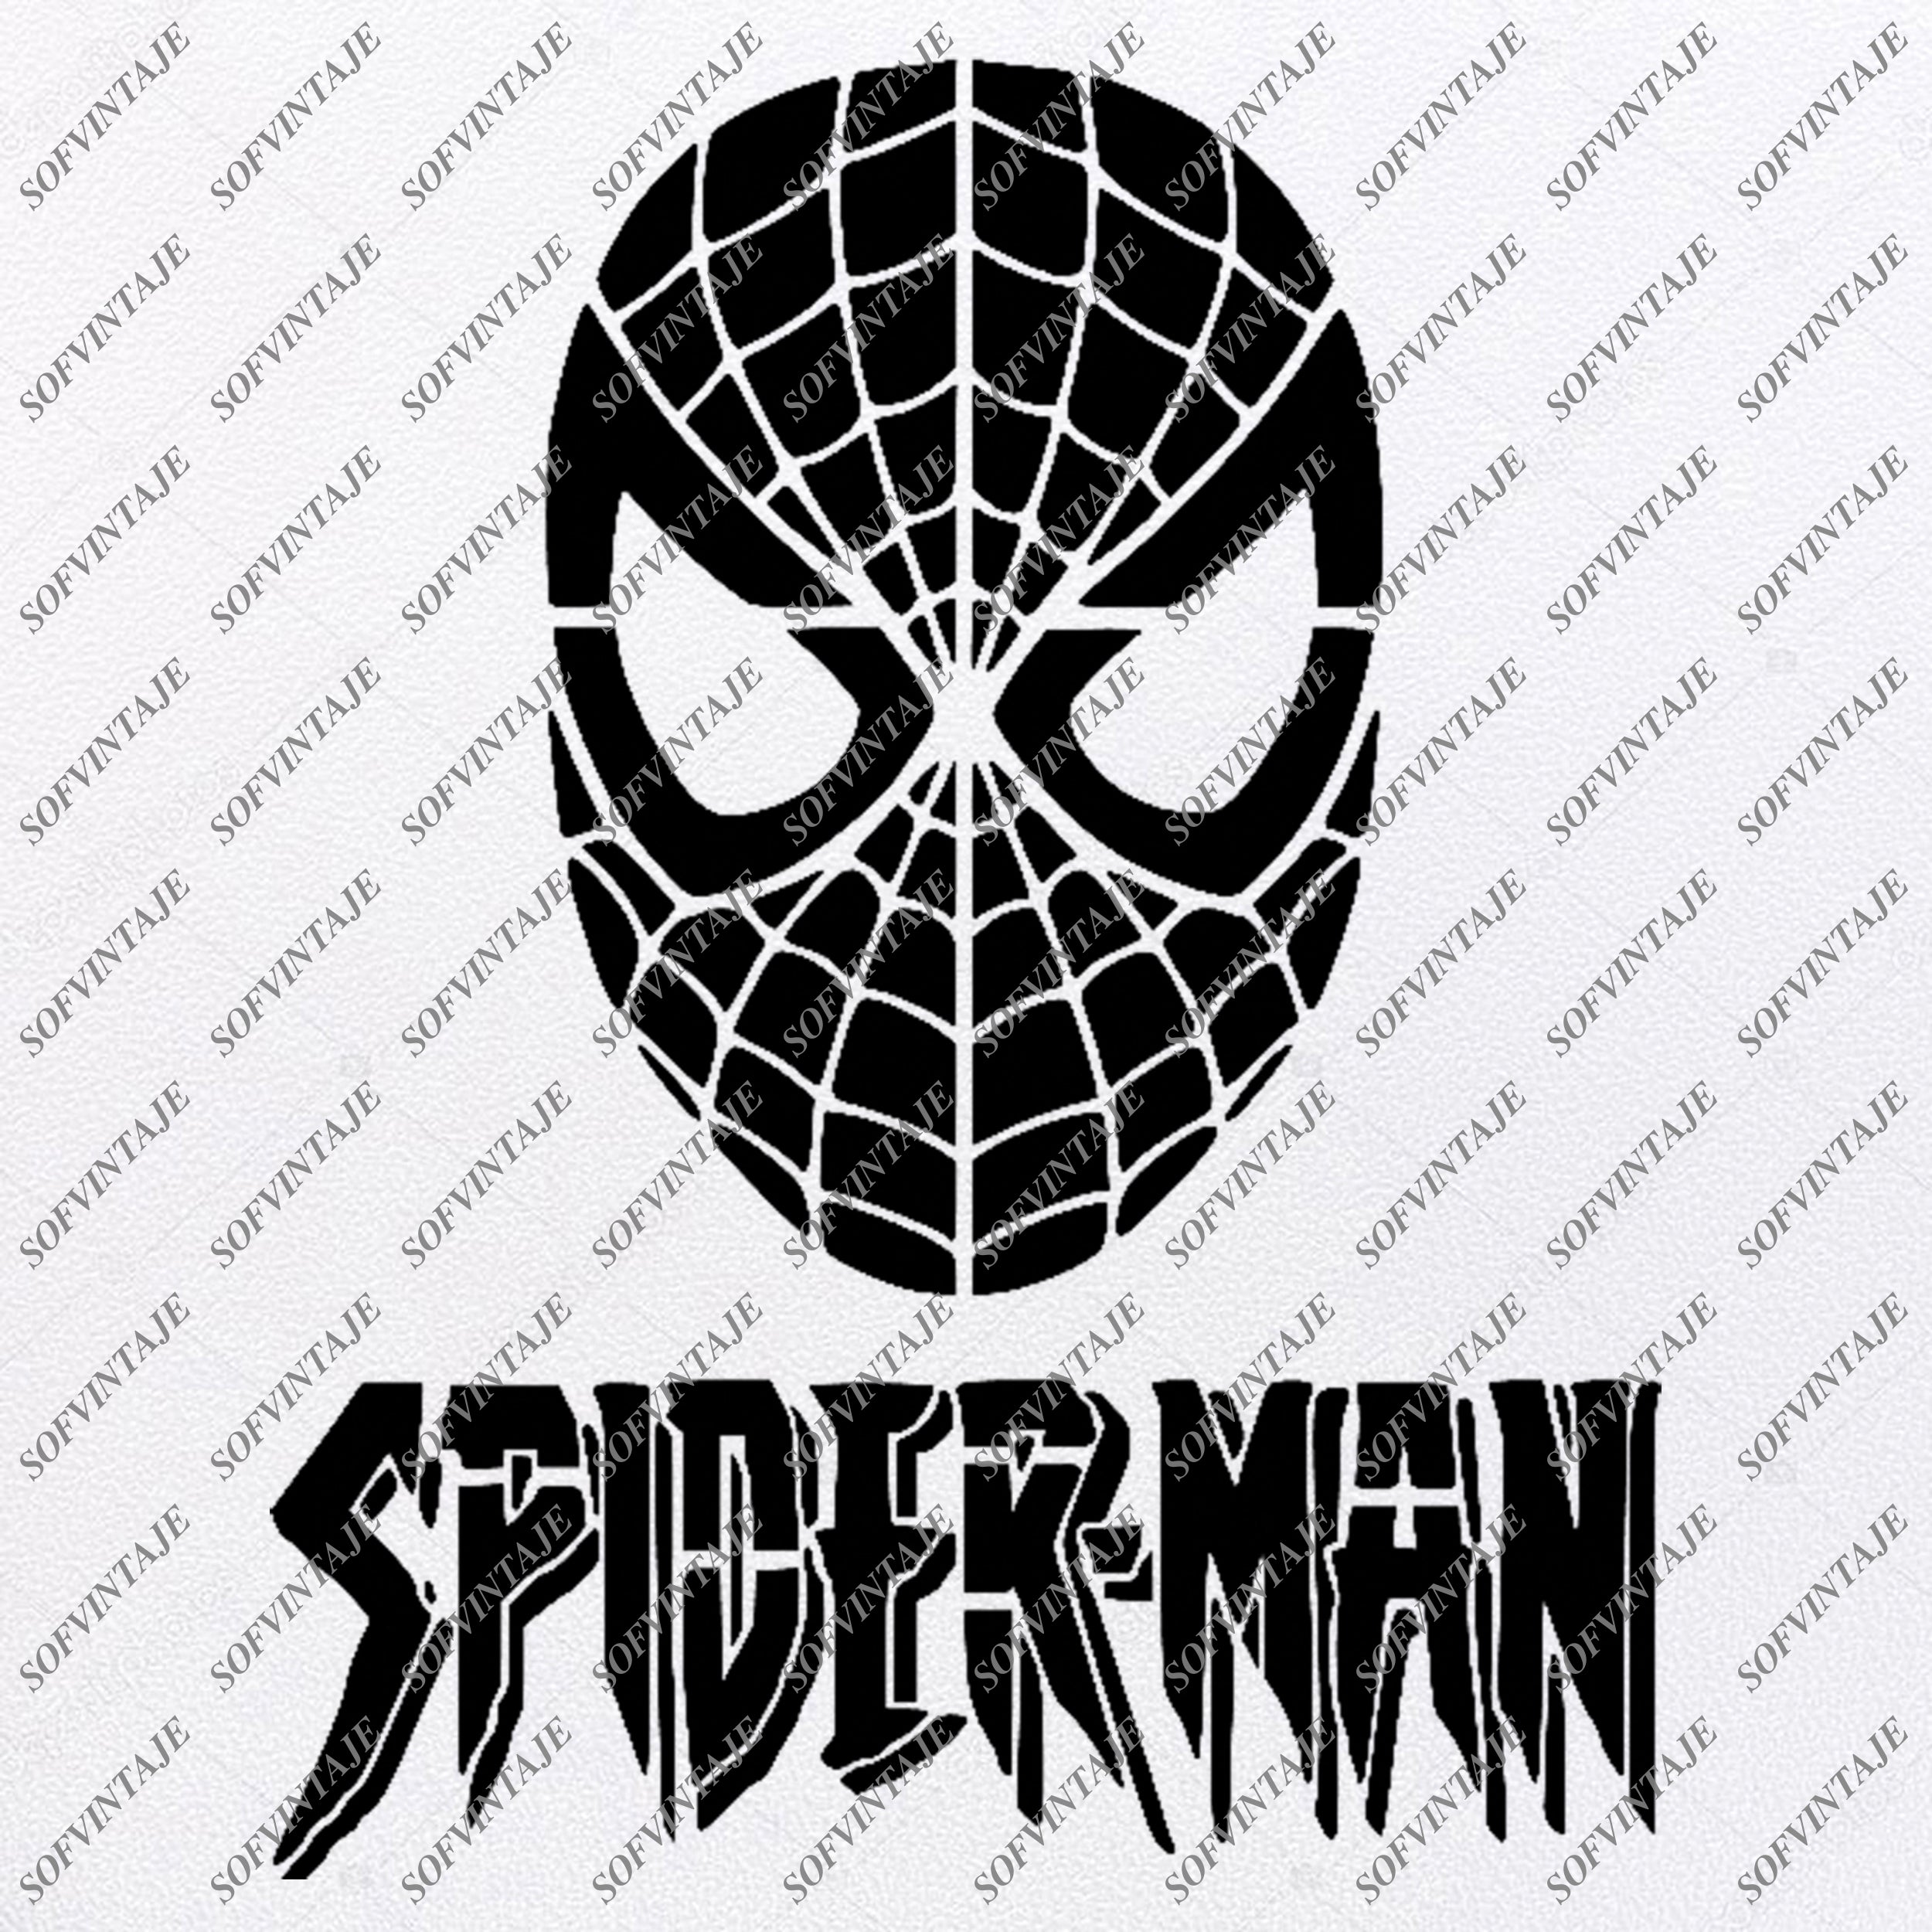 SpidermanSvgFile SpidermanOriginalSvgDesignTattooSvg SpidermanClipart SpidermanVectorGraphics SvgForCricut SvgForSilhouette SVG EPS PDF DXF PNG JPG AI cb4f3bbb 0082 4d54 9853